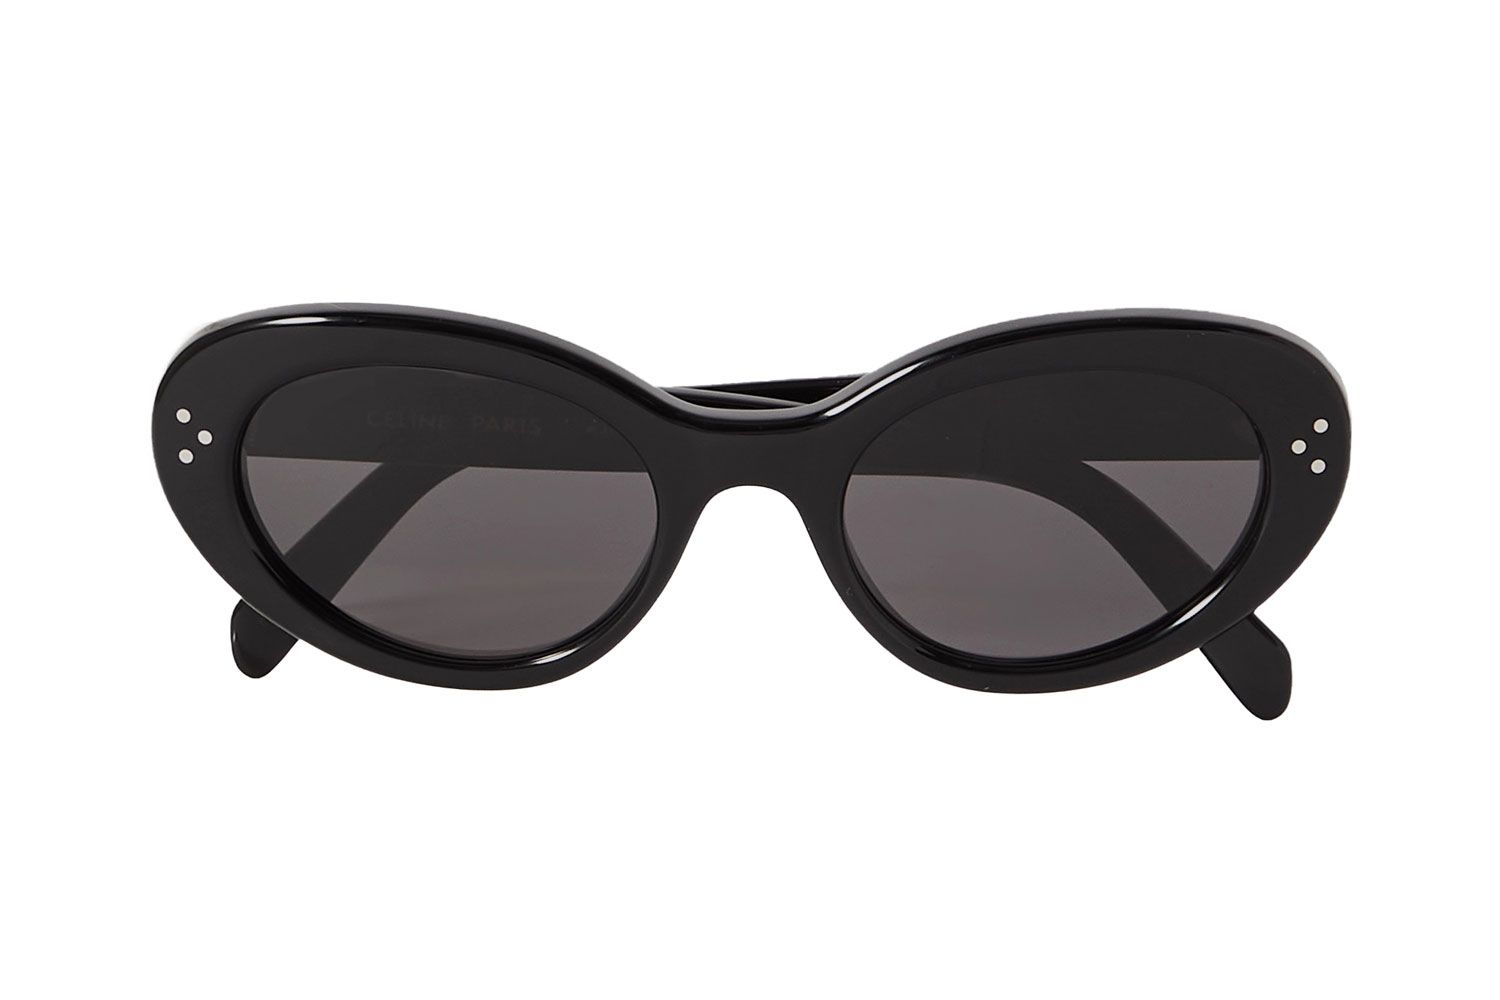 Óculos de sol Eyewear Triomphe de Ceeline em uma moldura oval de acetato